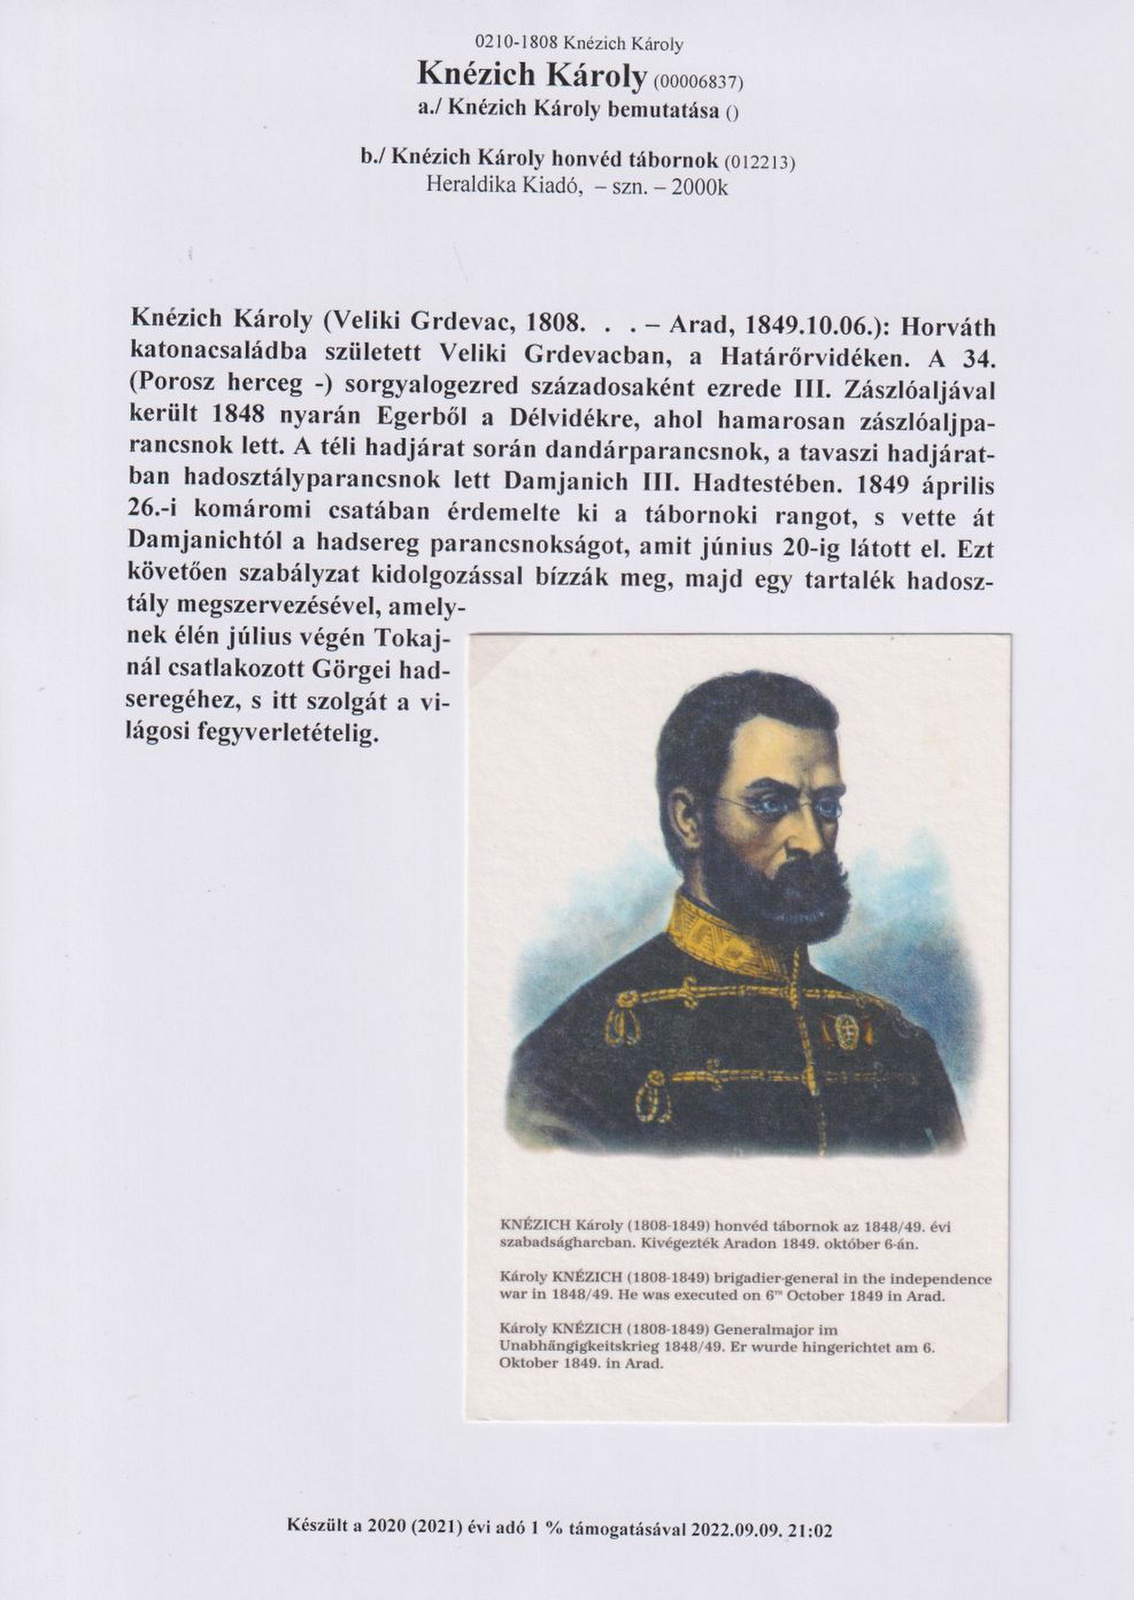 317-0210-1808 Knézich Károly 00006837